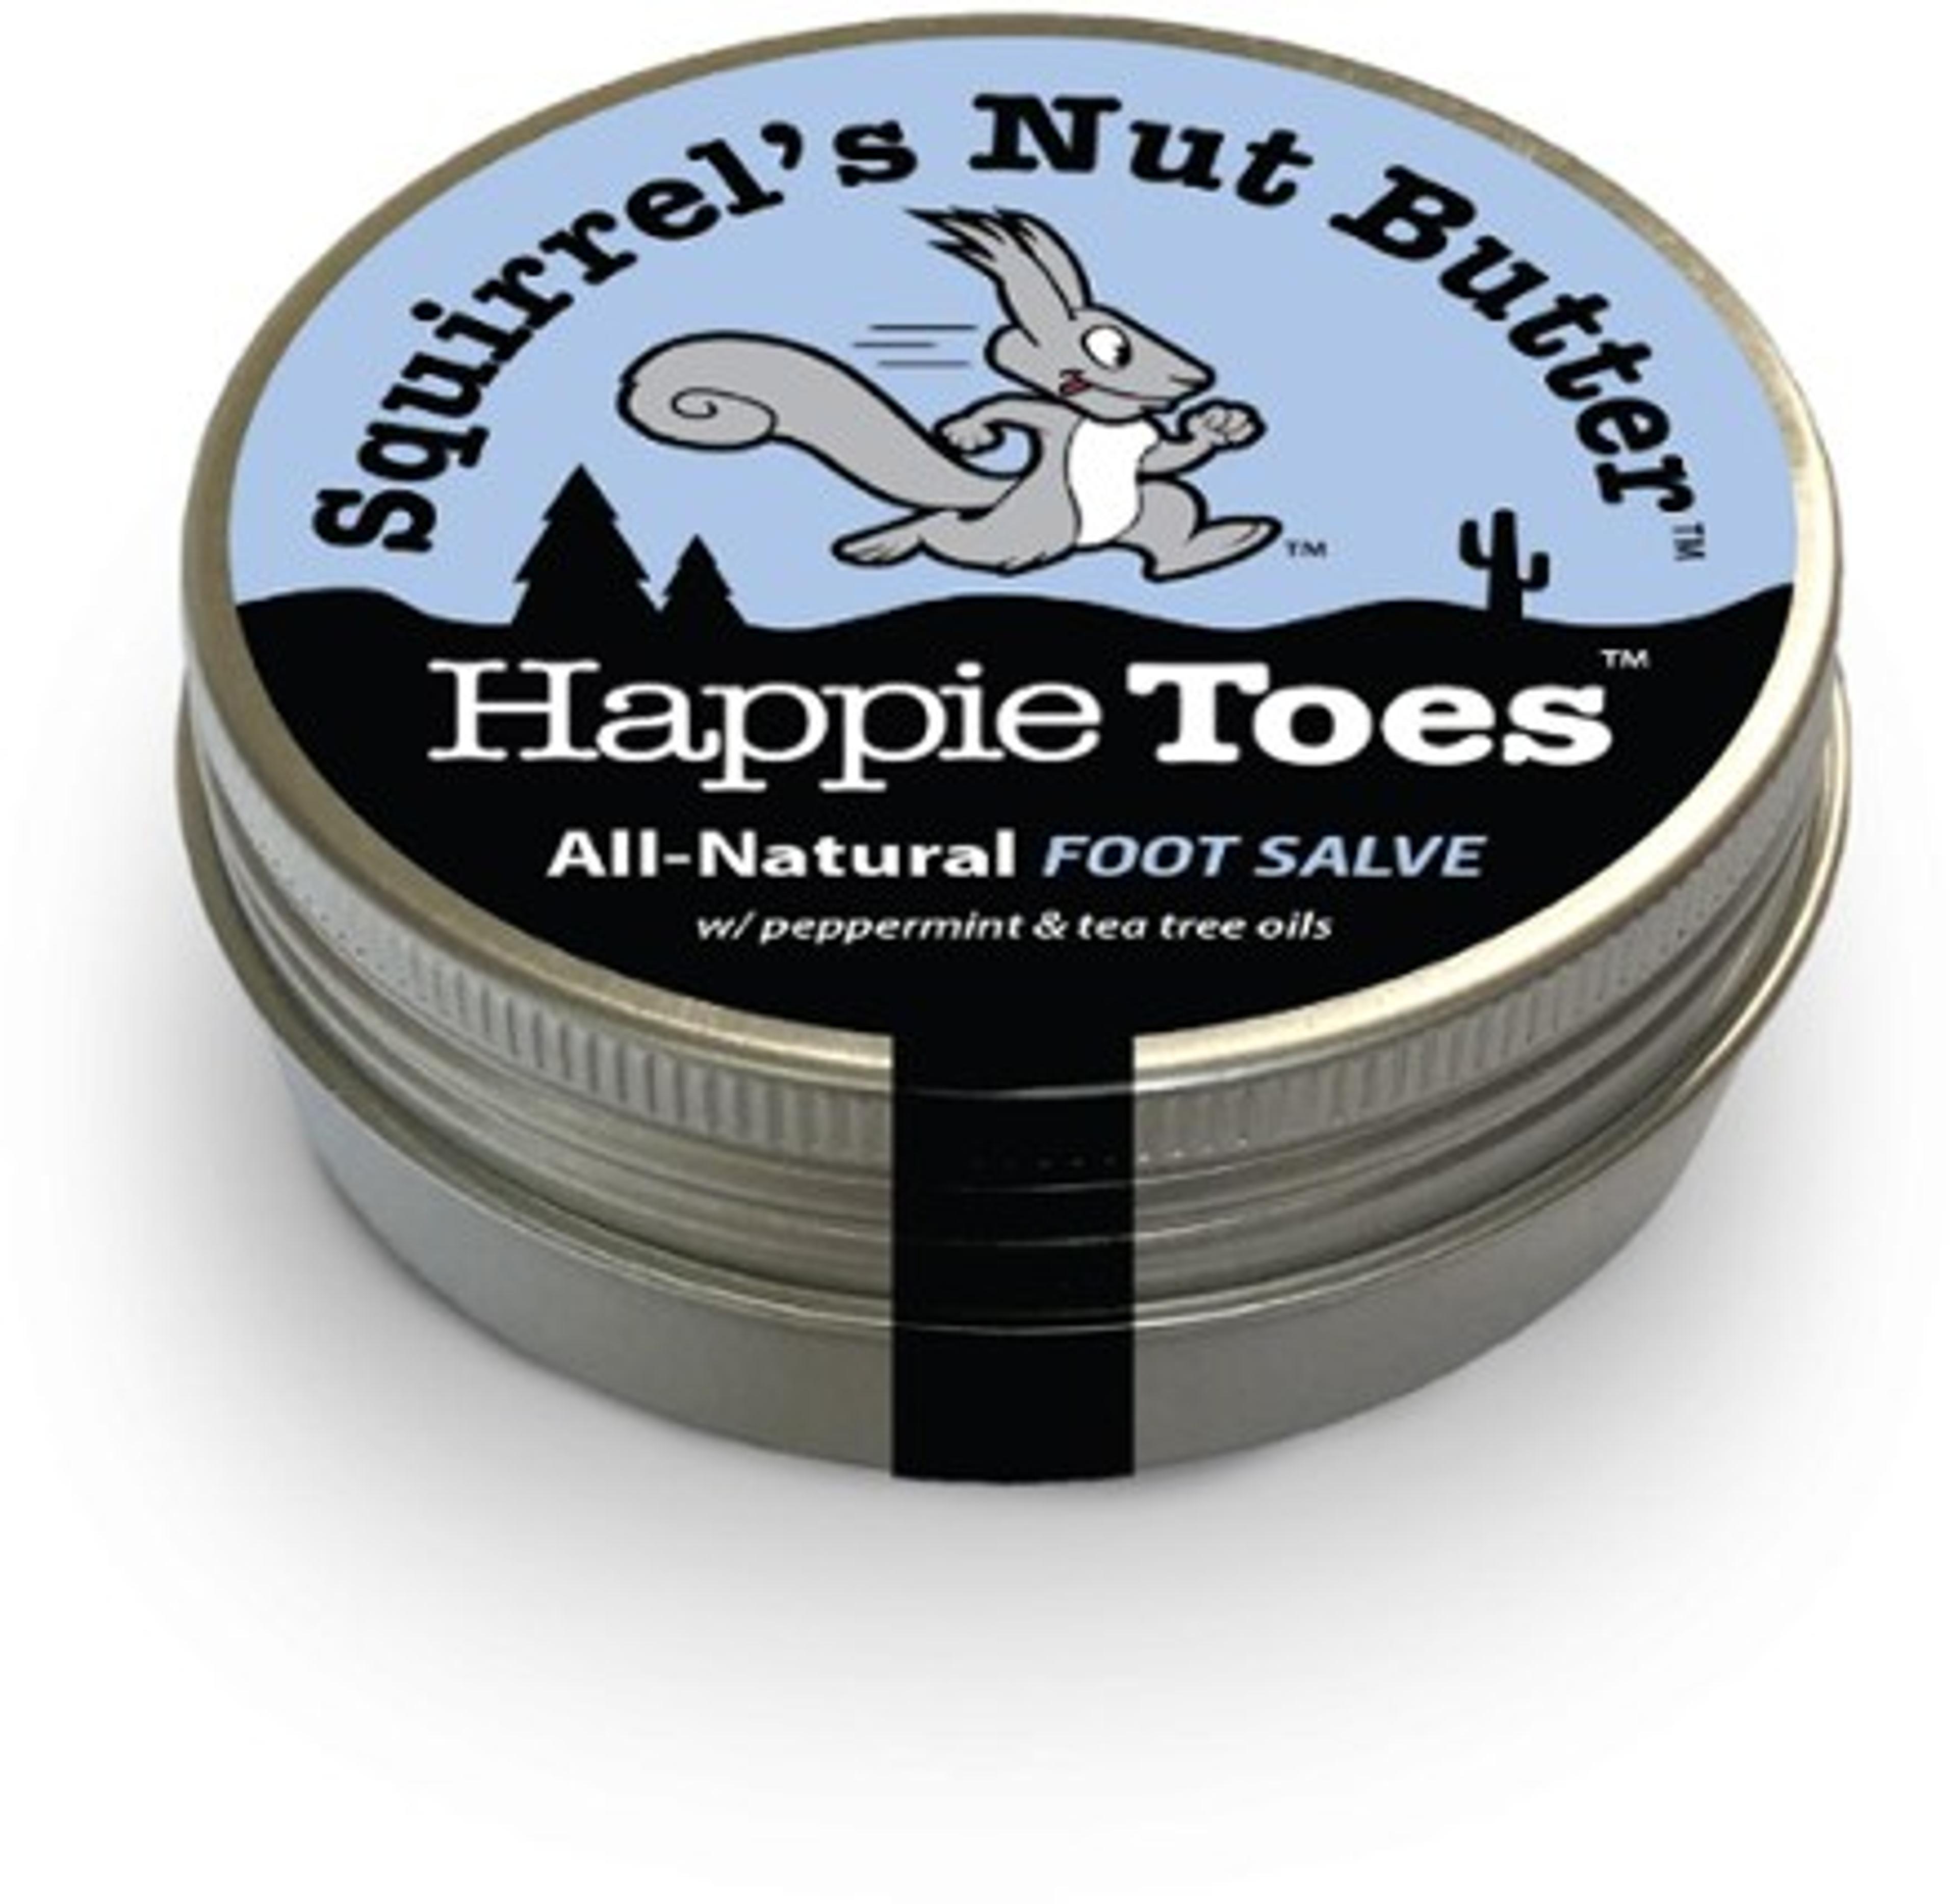 Squirrels Nut Butter Happie Toes Salve Tin - 2.0 oz. | REI Co-op